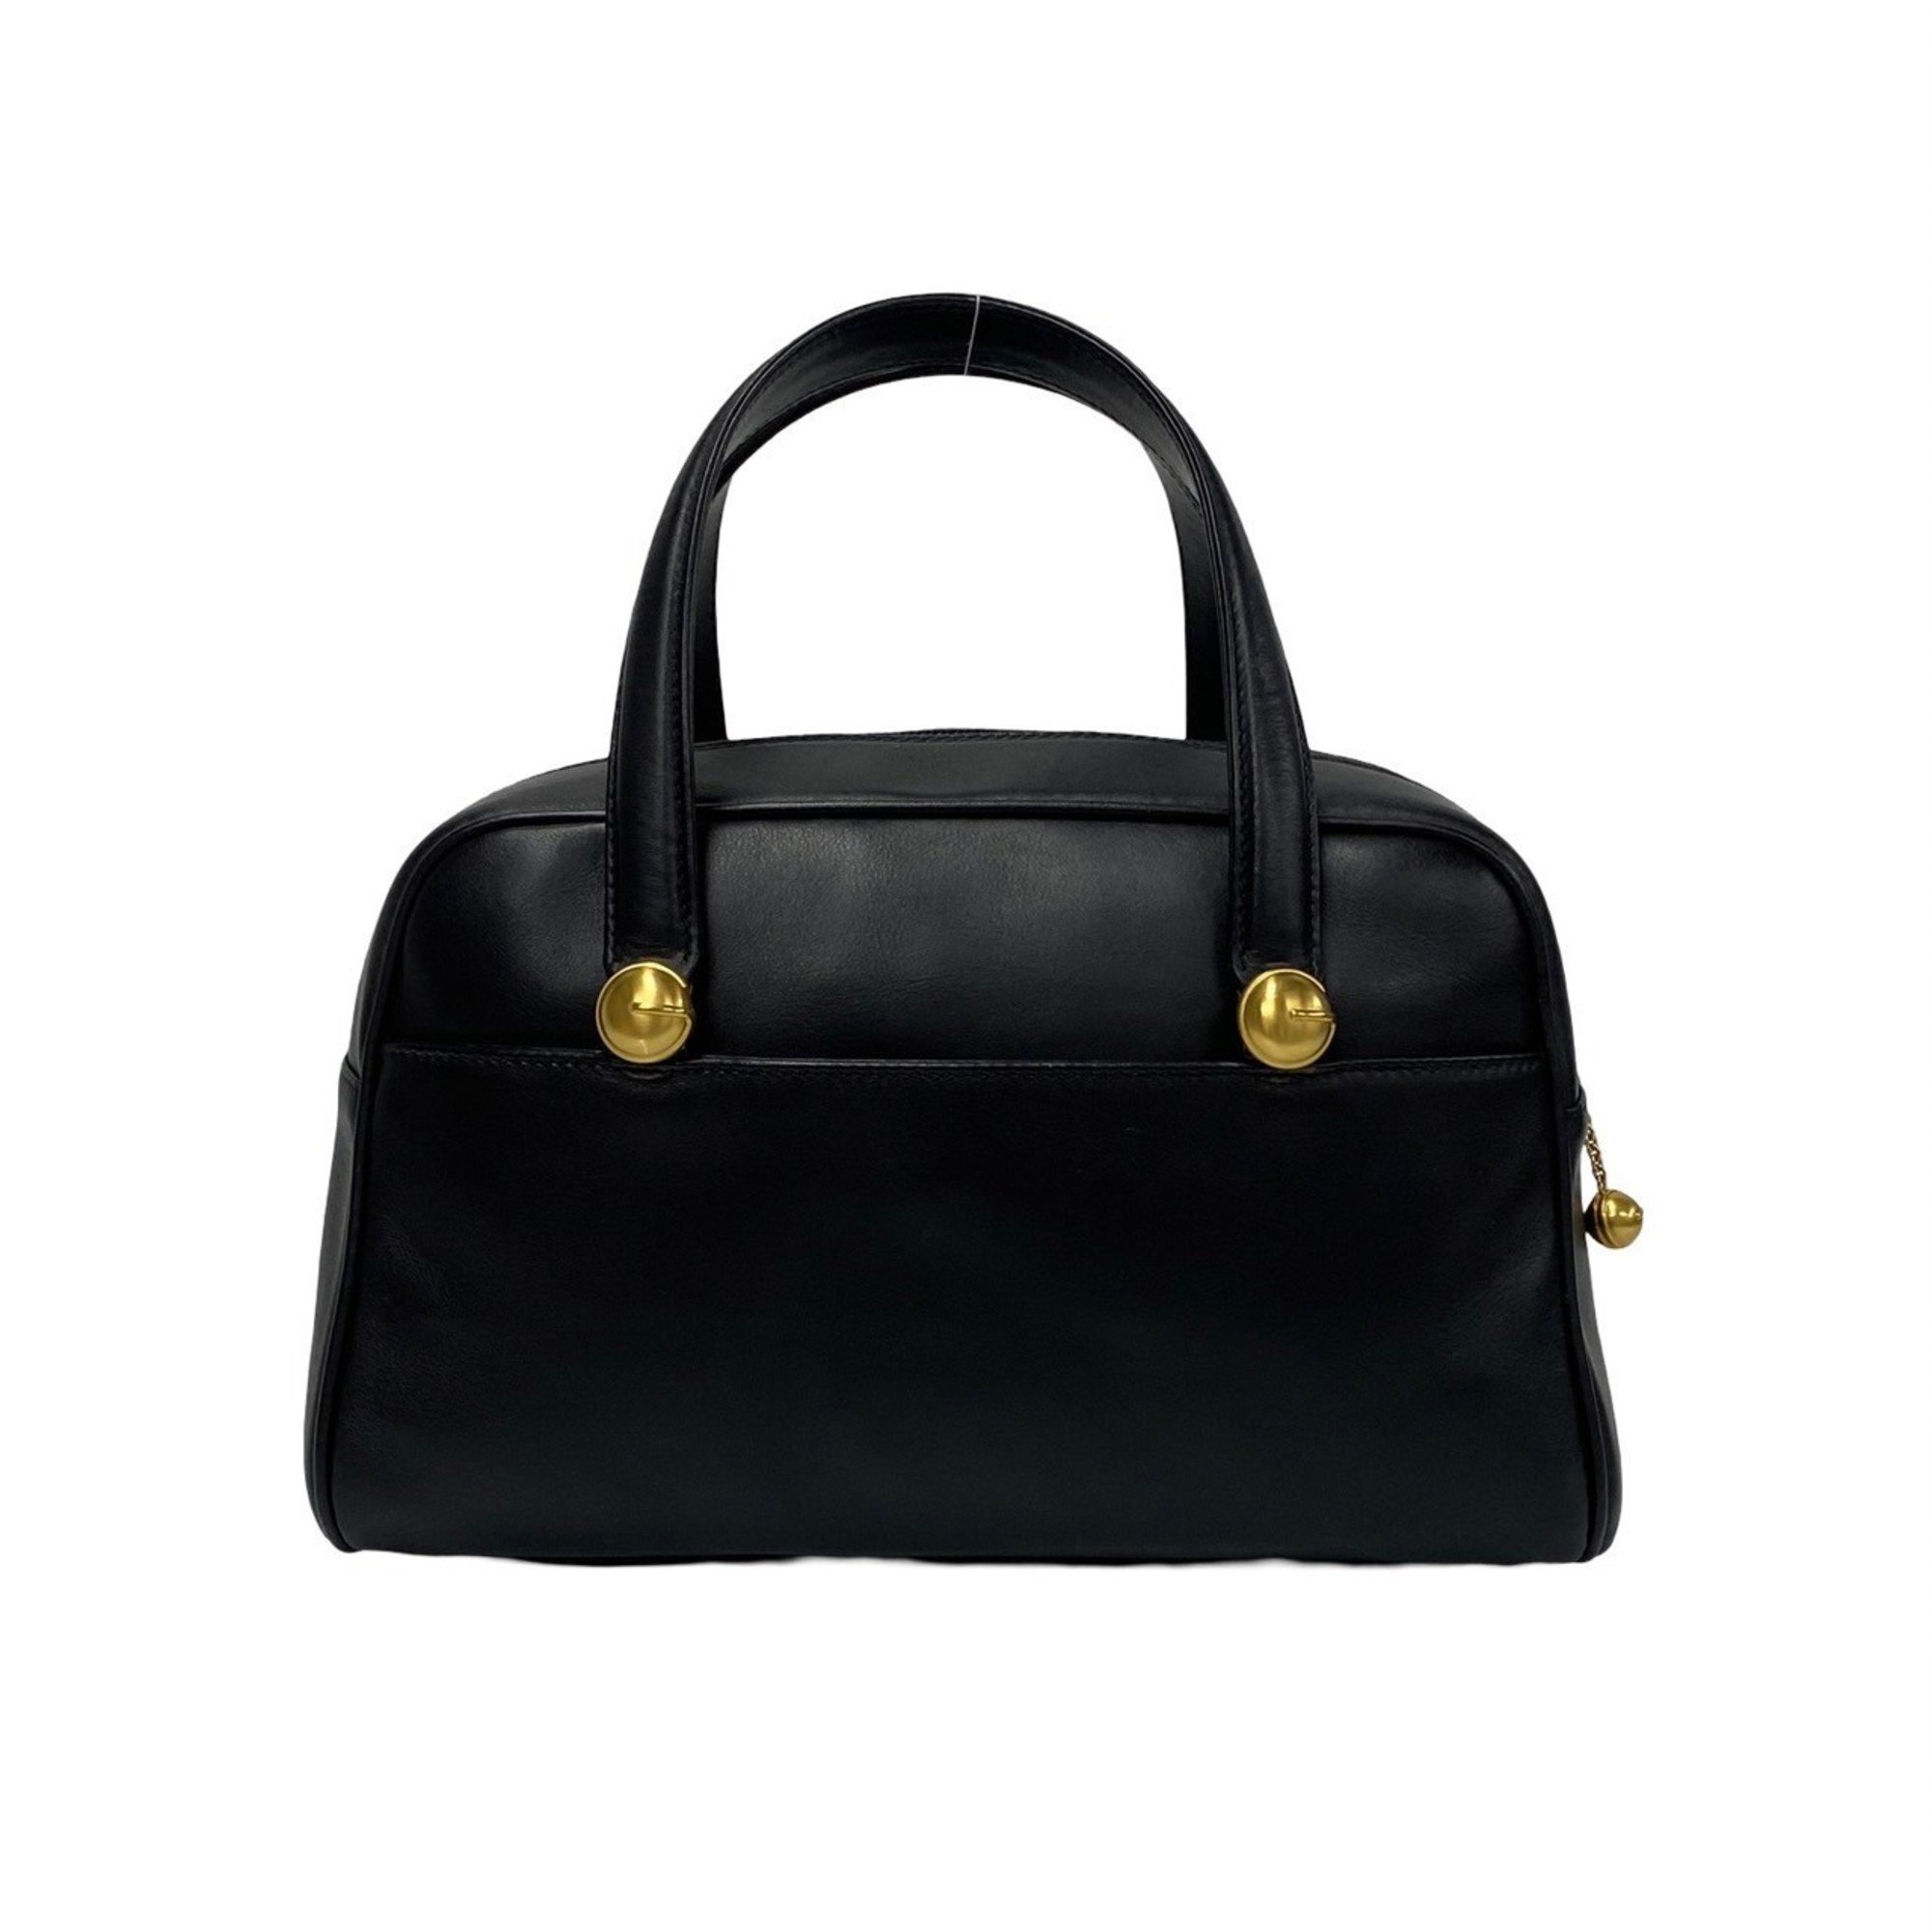 GUCCI Old Gucci G hardware leather handbag Boston bag black 07962